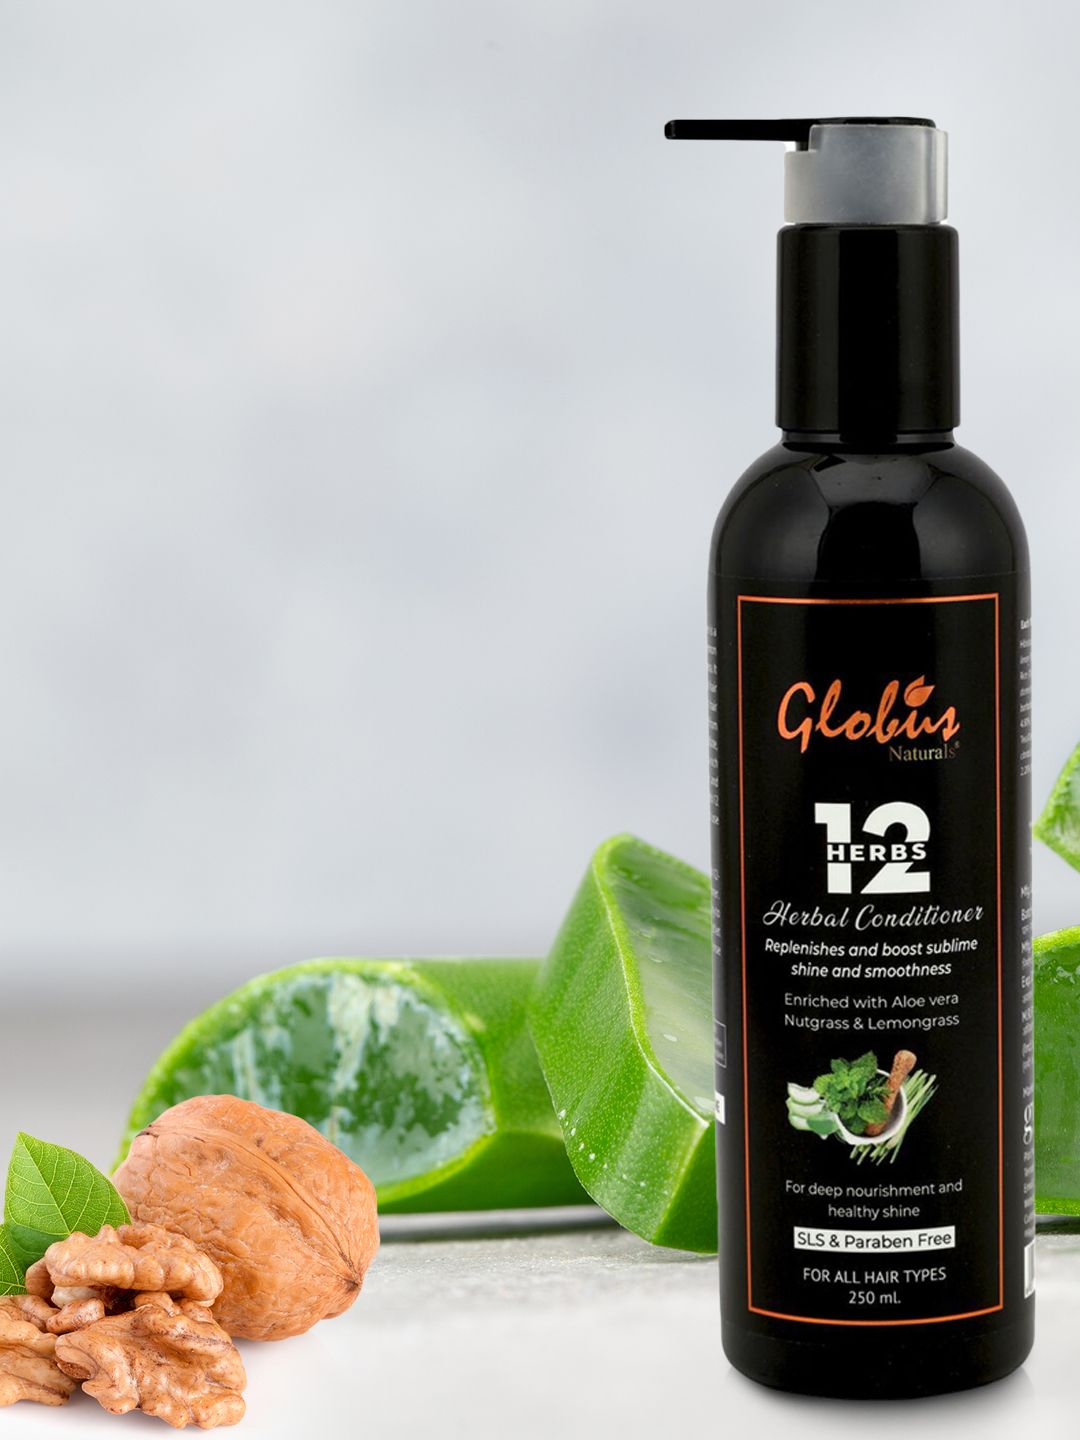 Globus Naturals 12 Herbs Hair Growth Shampoo 250 ml Price in India